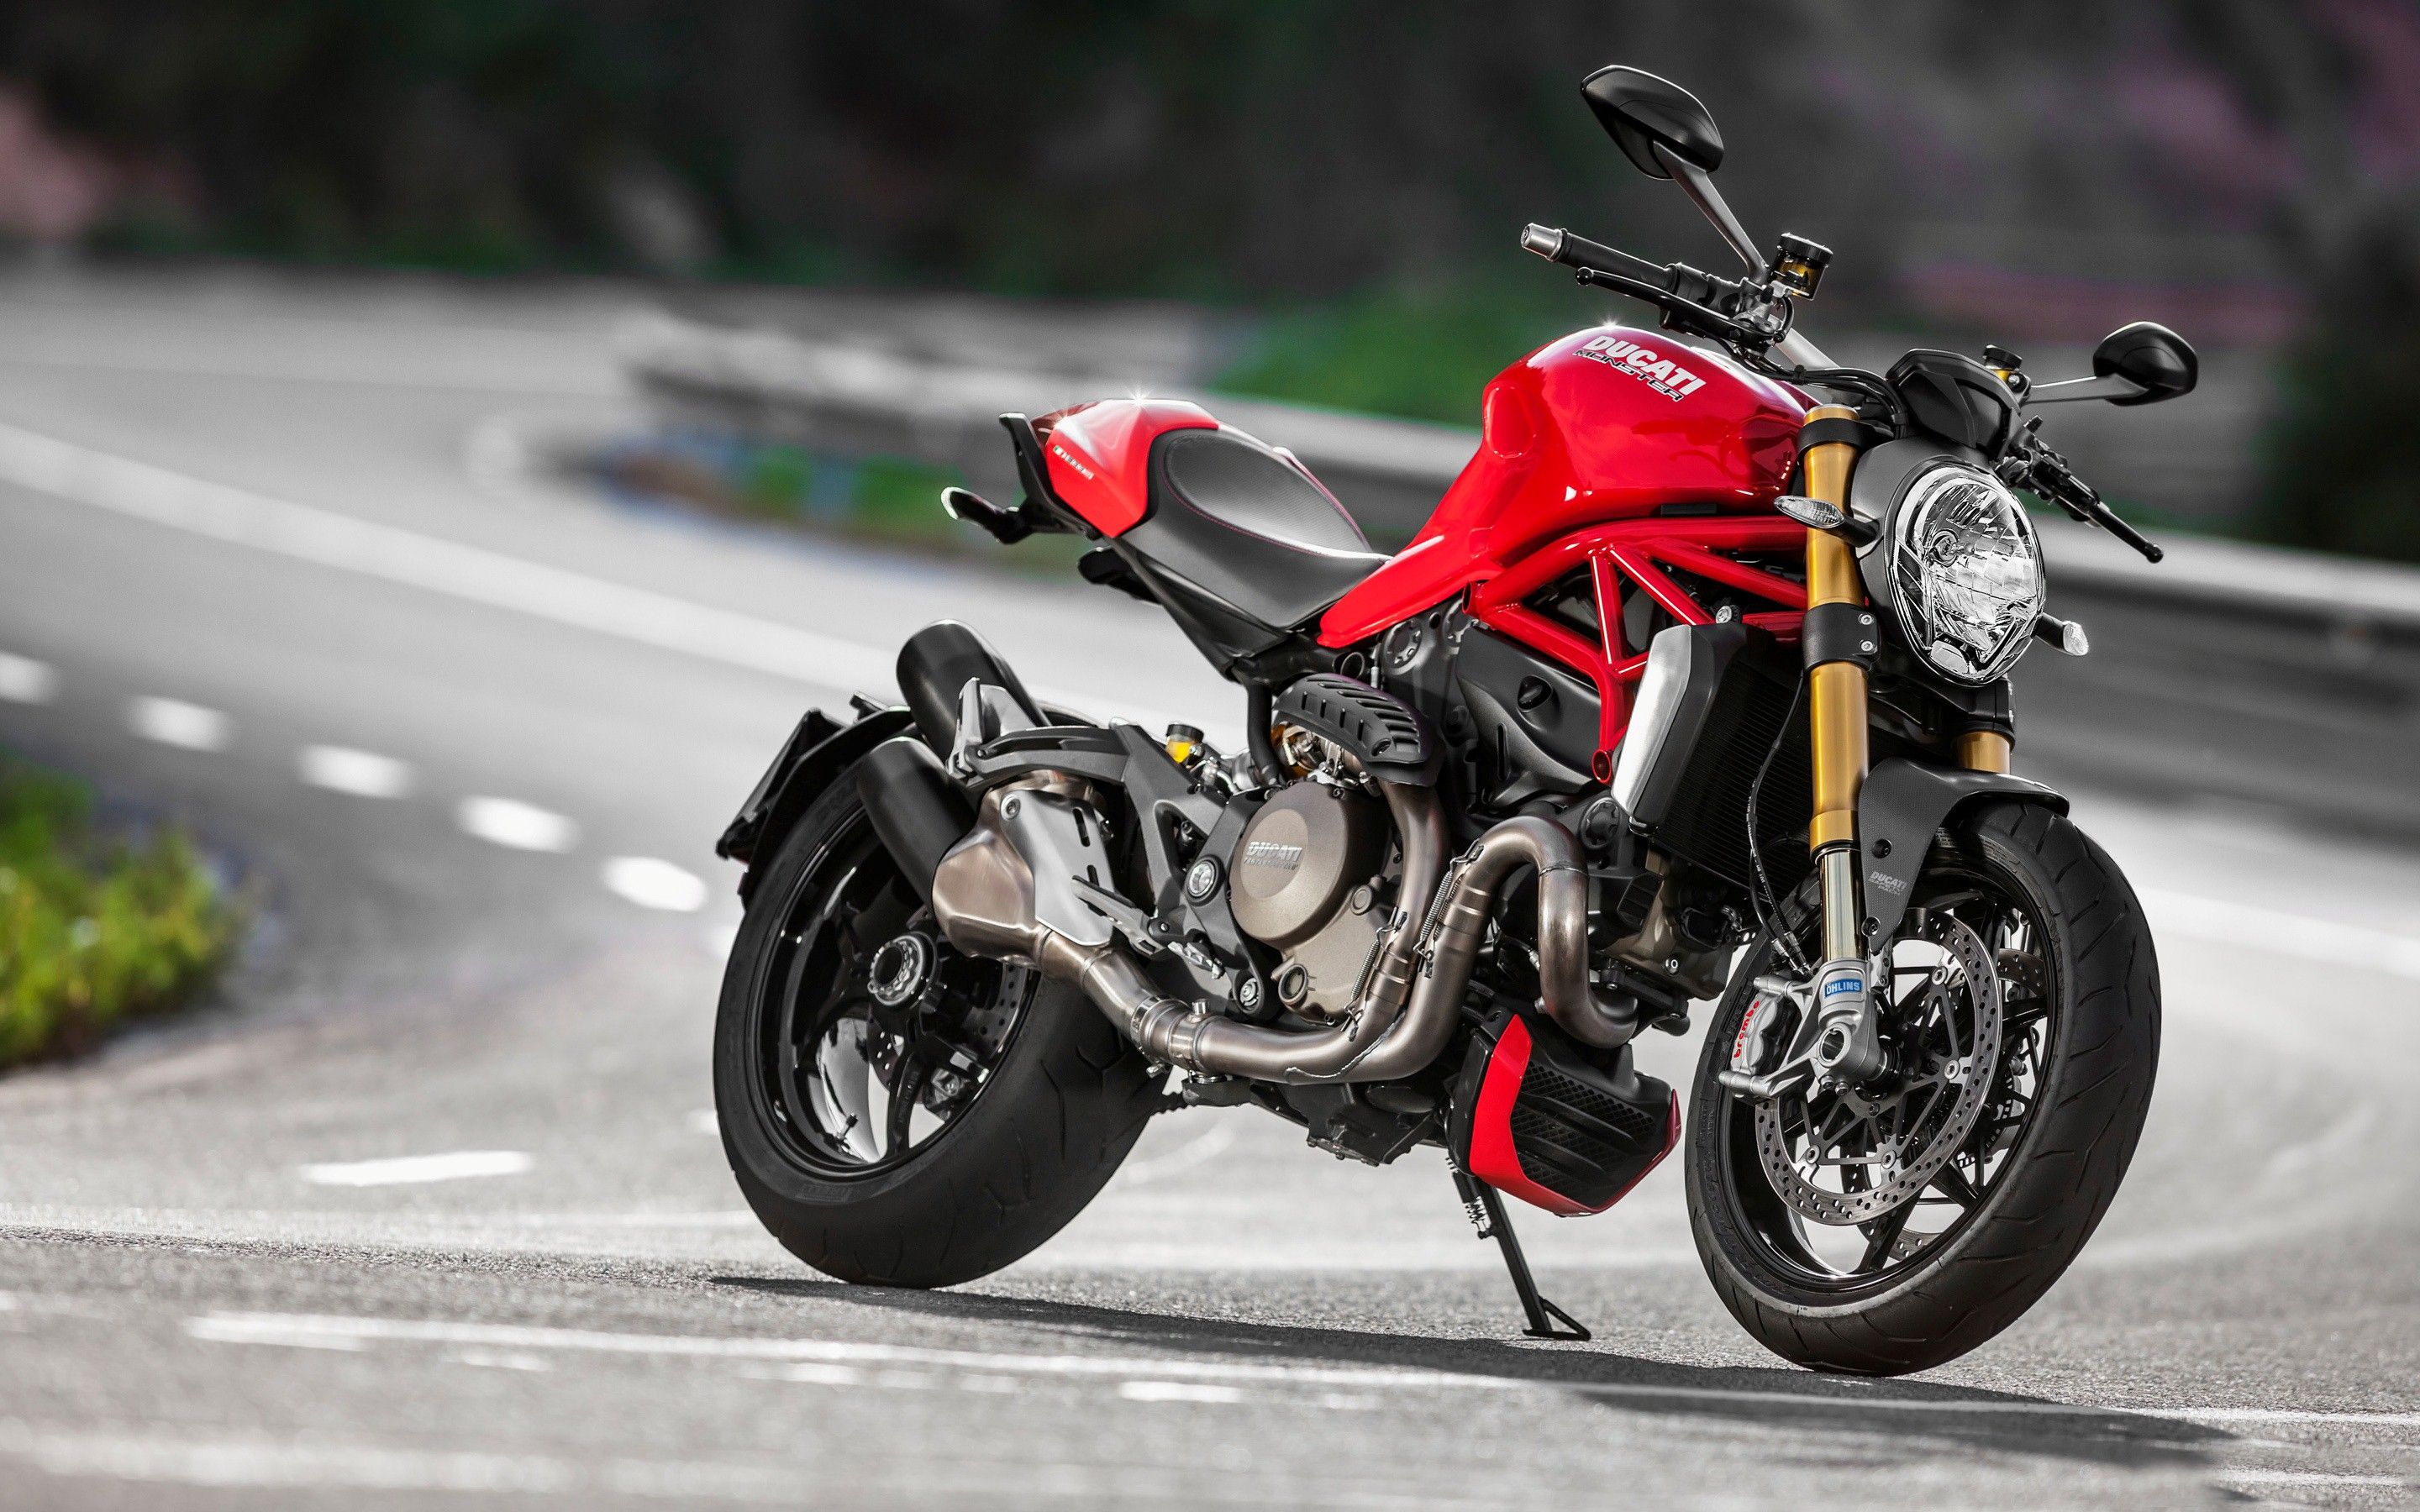 Latest Ducati Monster Bike Image